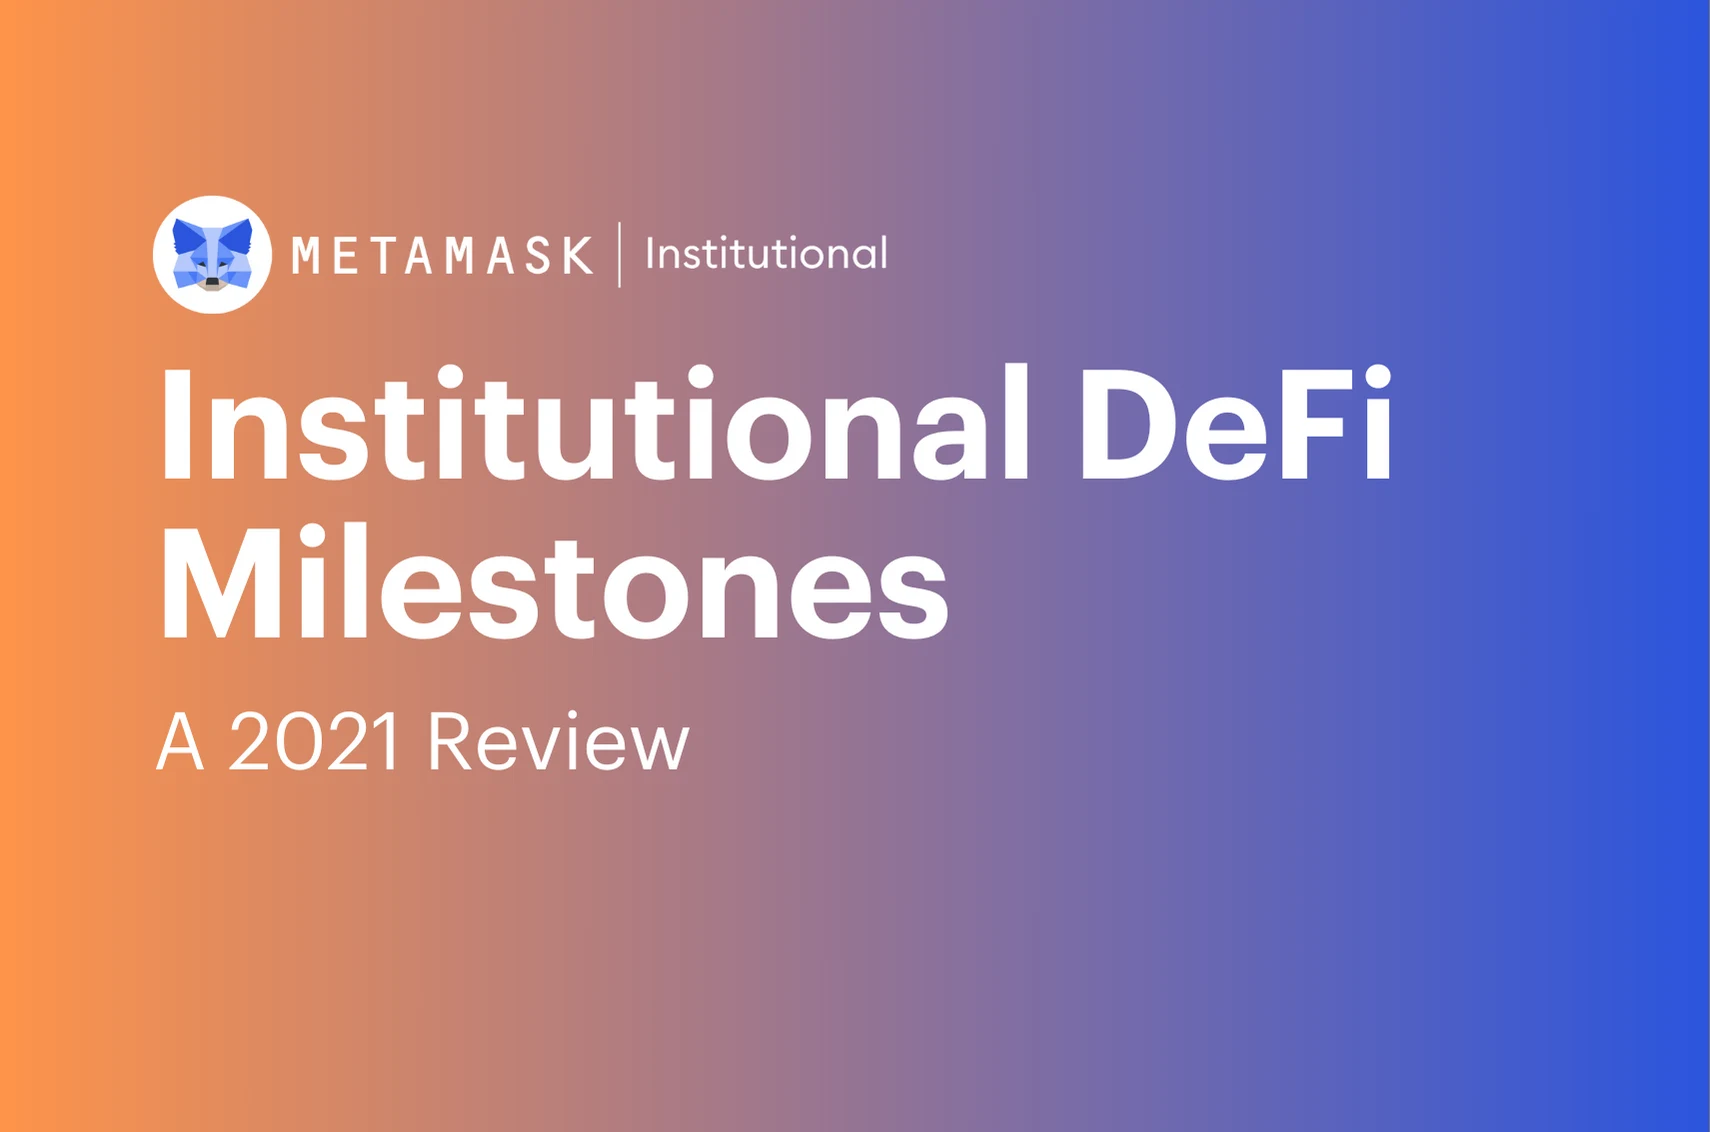 Image: Institutional DeFi Milestones: A 2021 Review